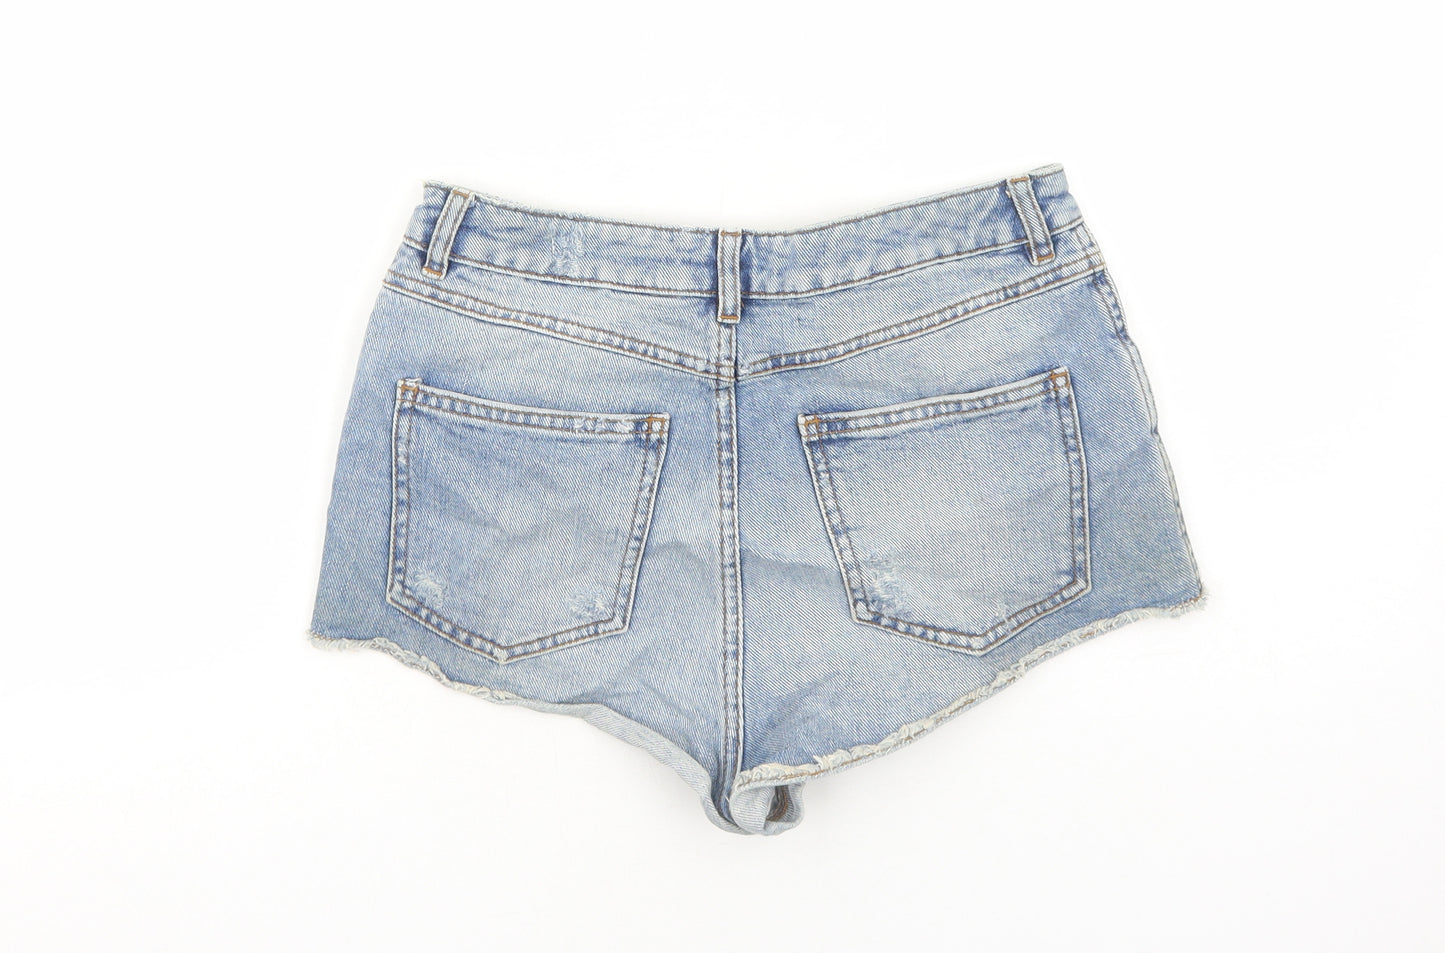 Topshop Womens Blue Cotton Hot Pants Shorts Size 10 Regular Button